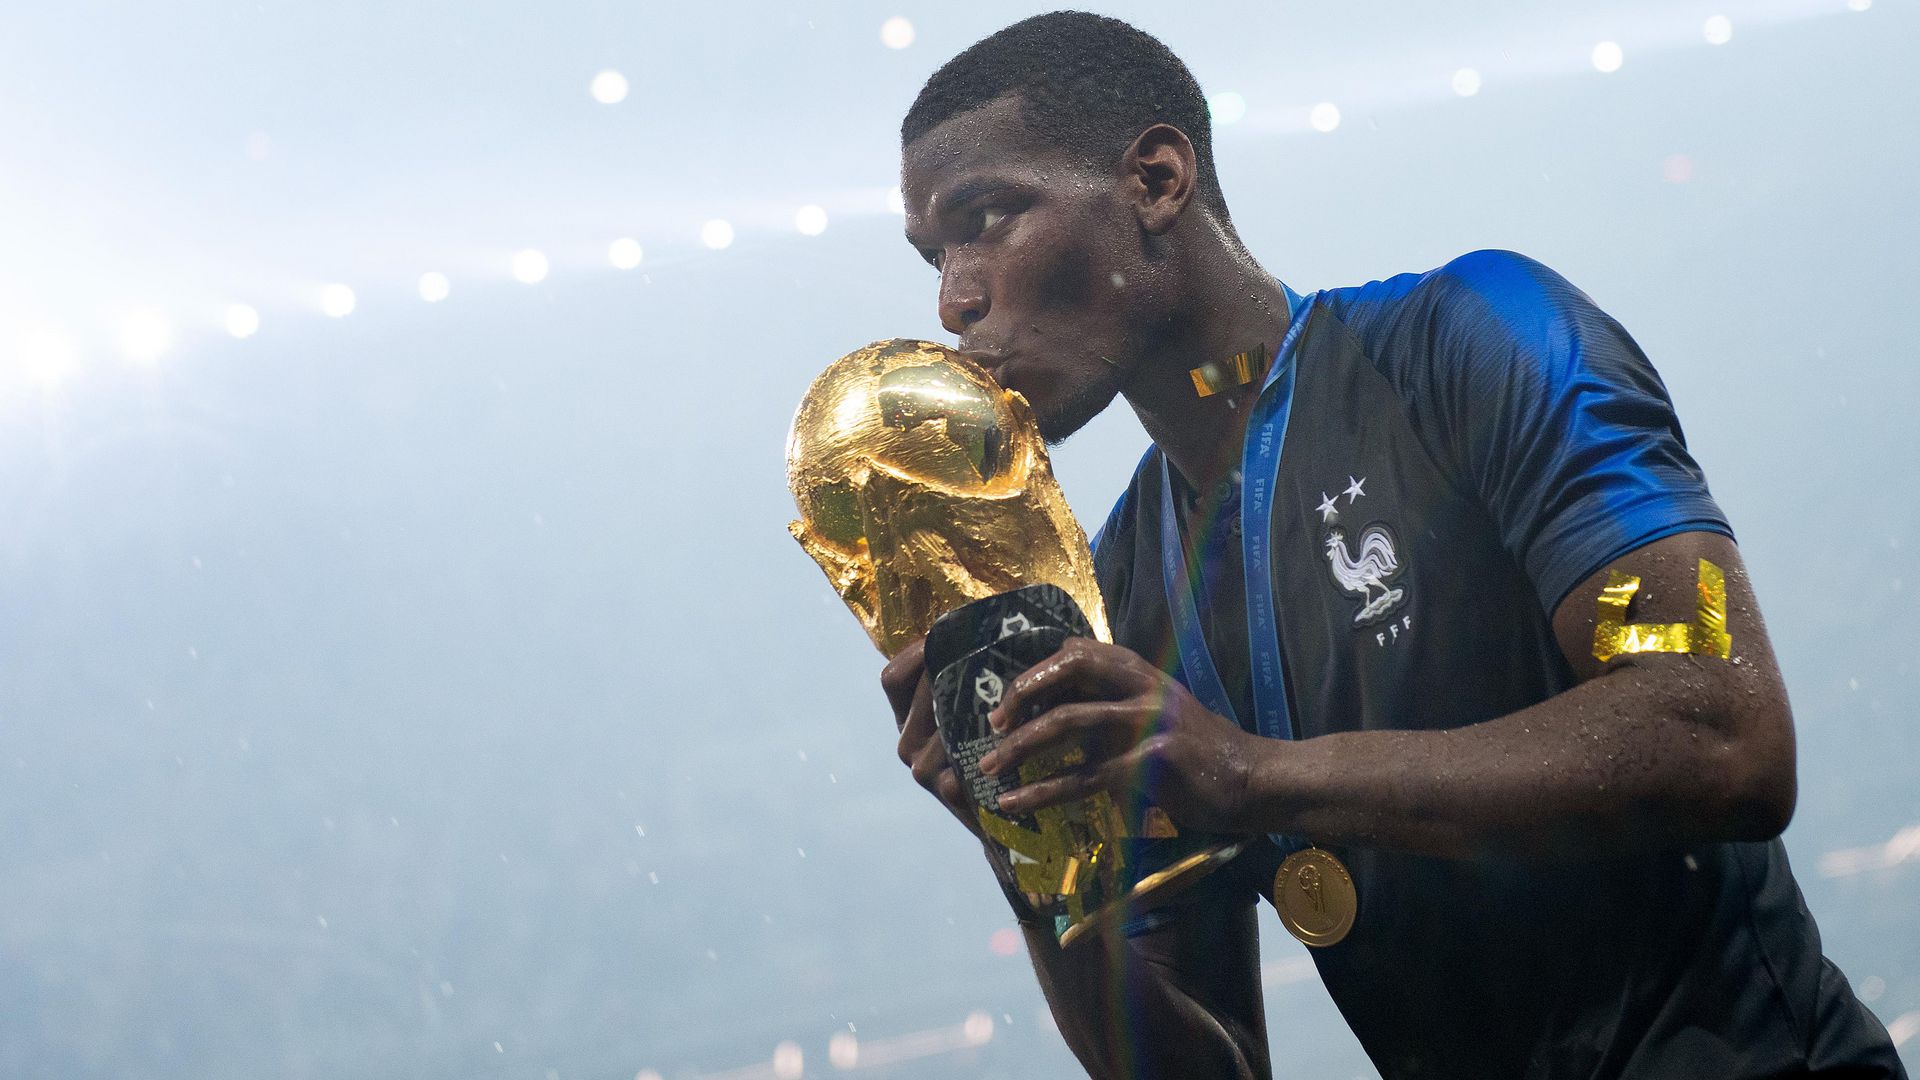 France midfielder Paul Pogba will miss 2022 World Cup